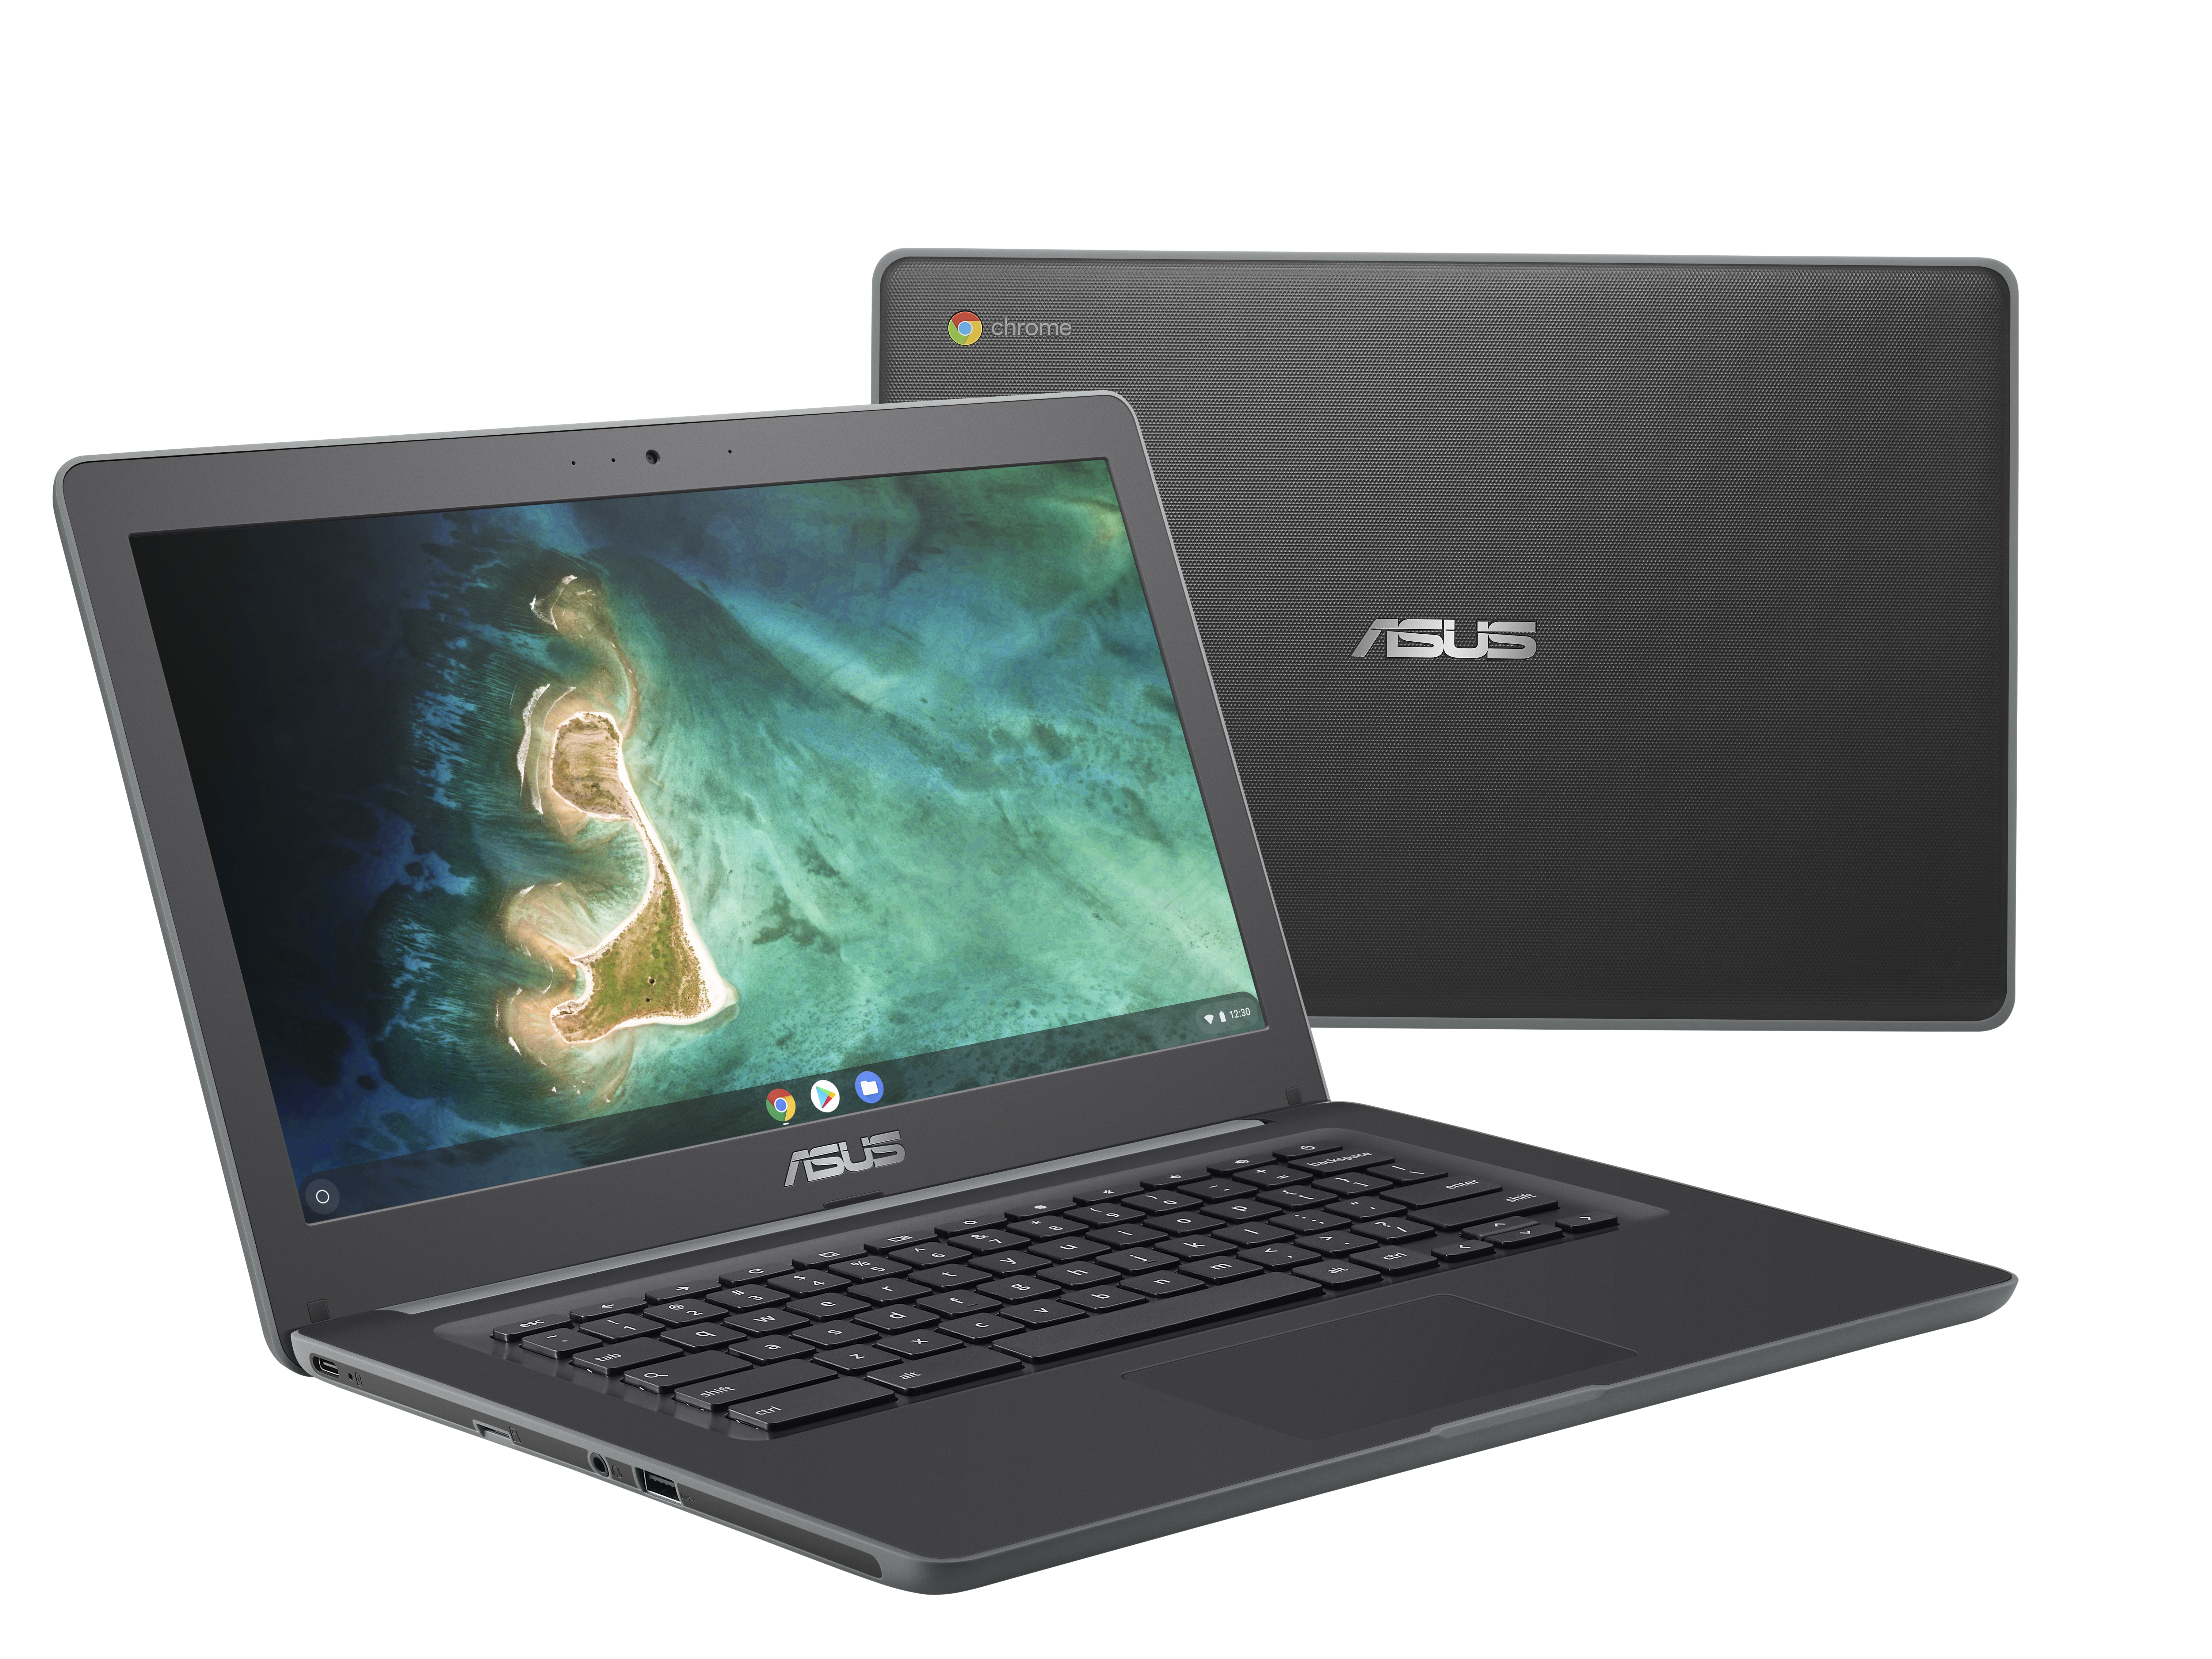 ASUS Chromebook C403 in Dark Grey